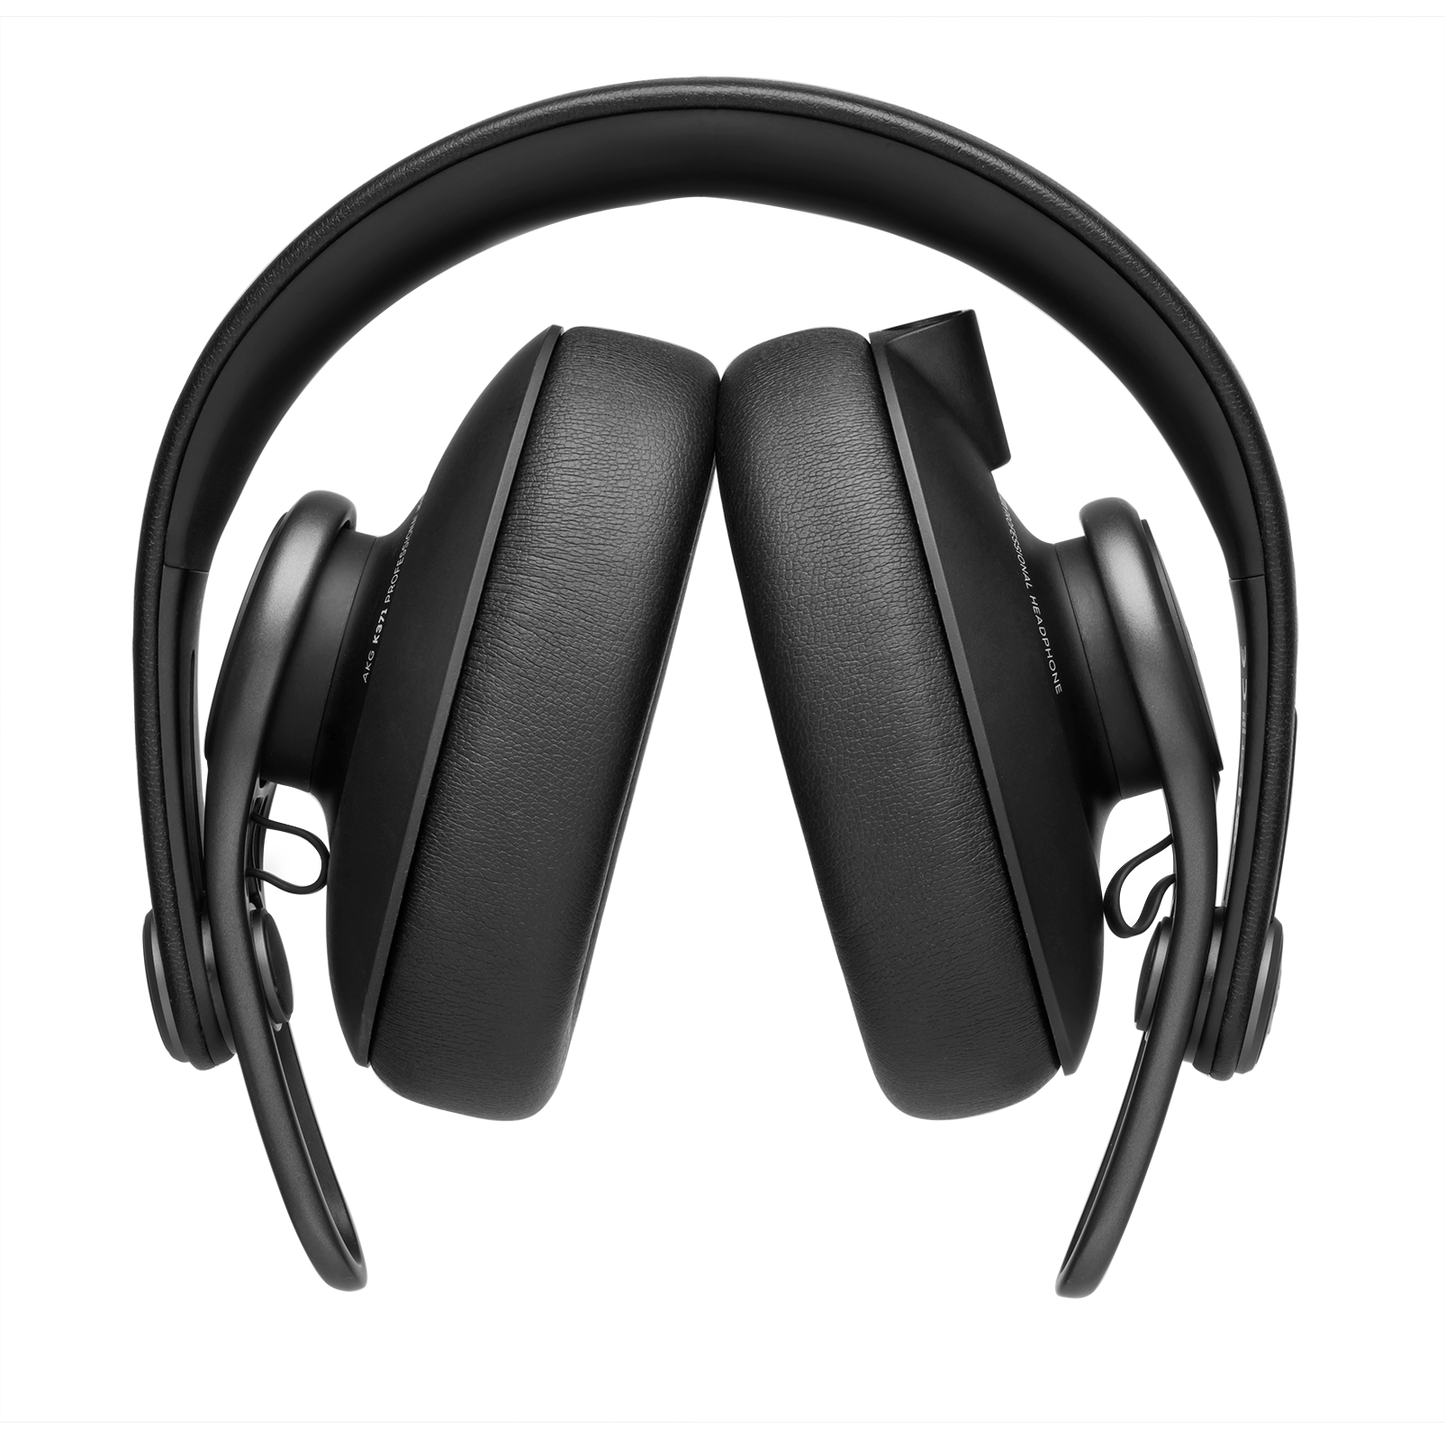 AKG K371 Professional Studio Headphones